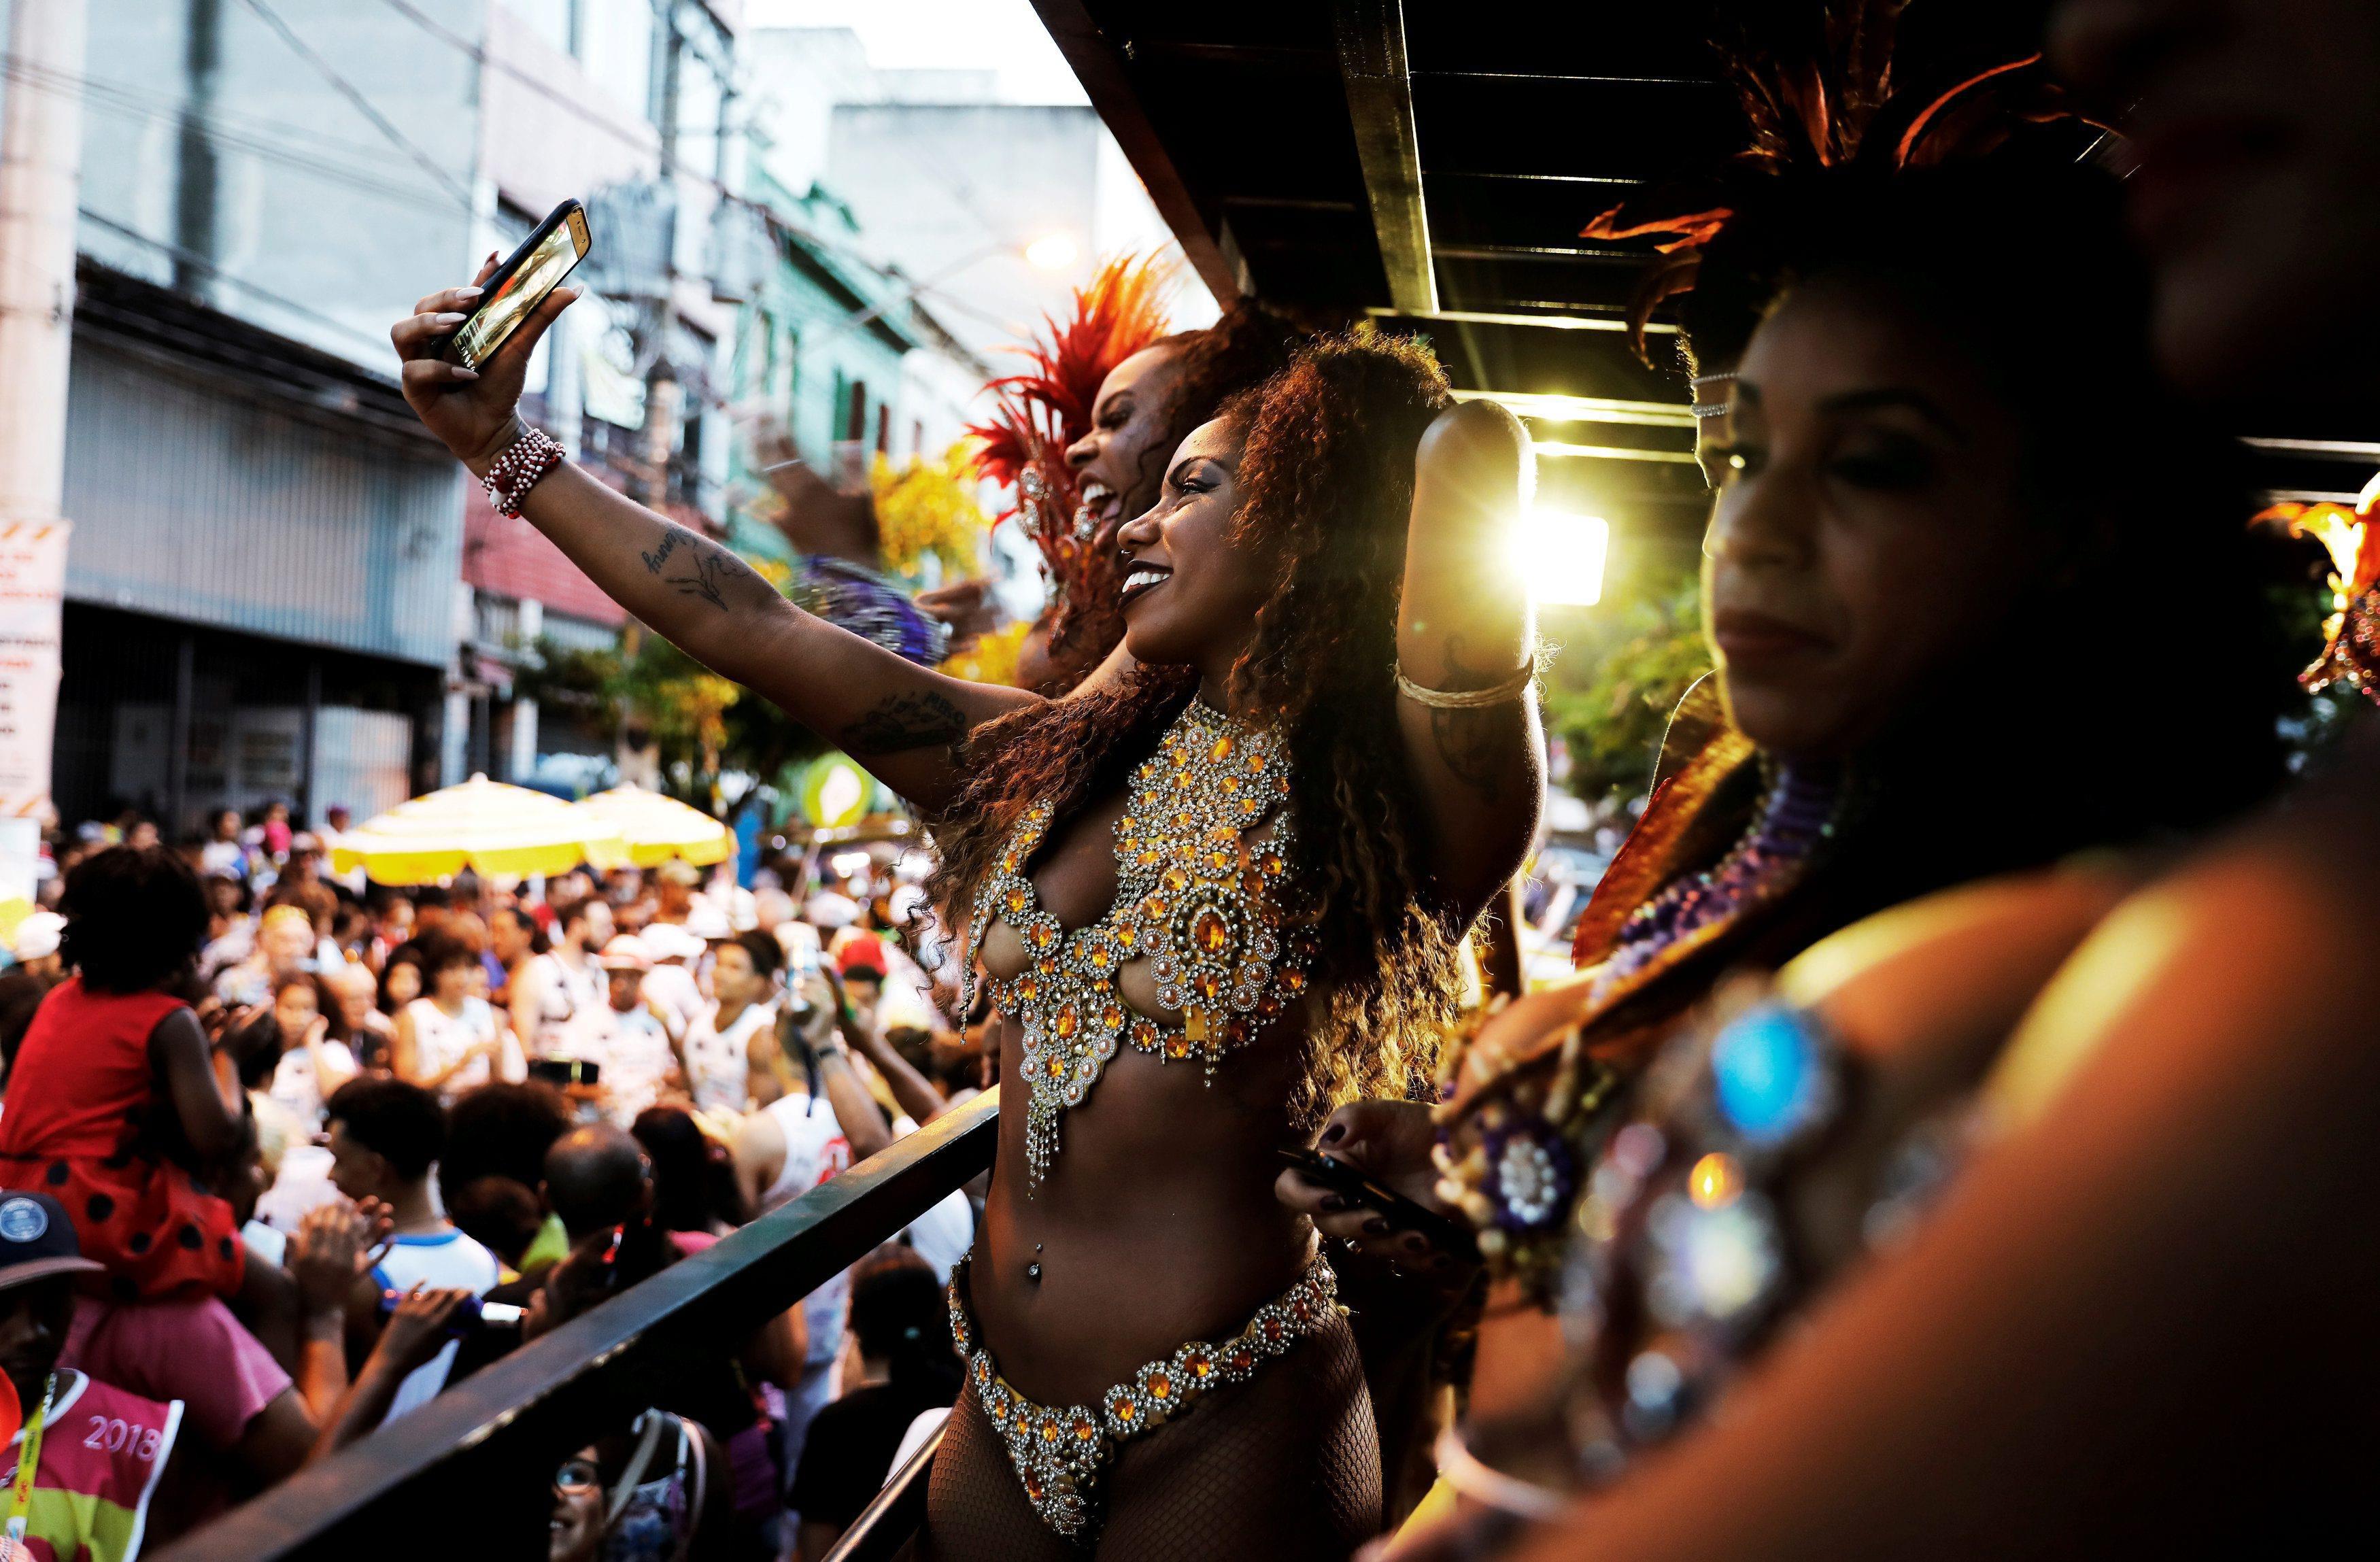 Women take part in block party during carnival festivities at Bixiga neighbourhood in Sao Paulo